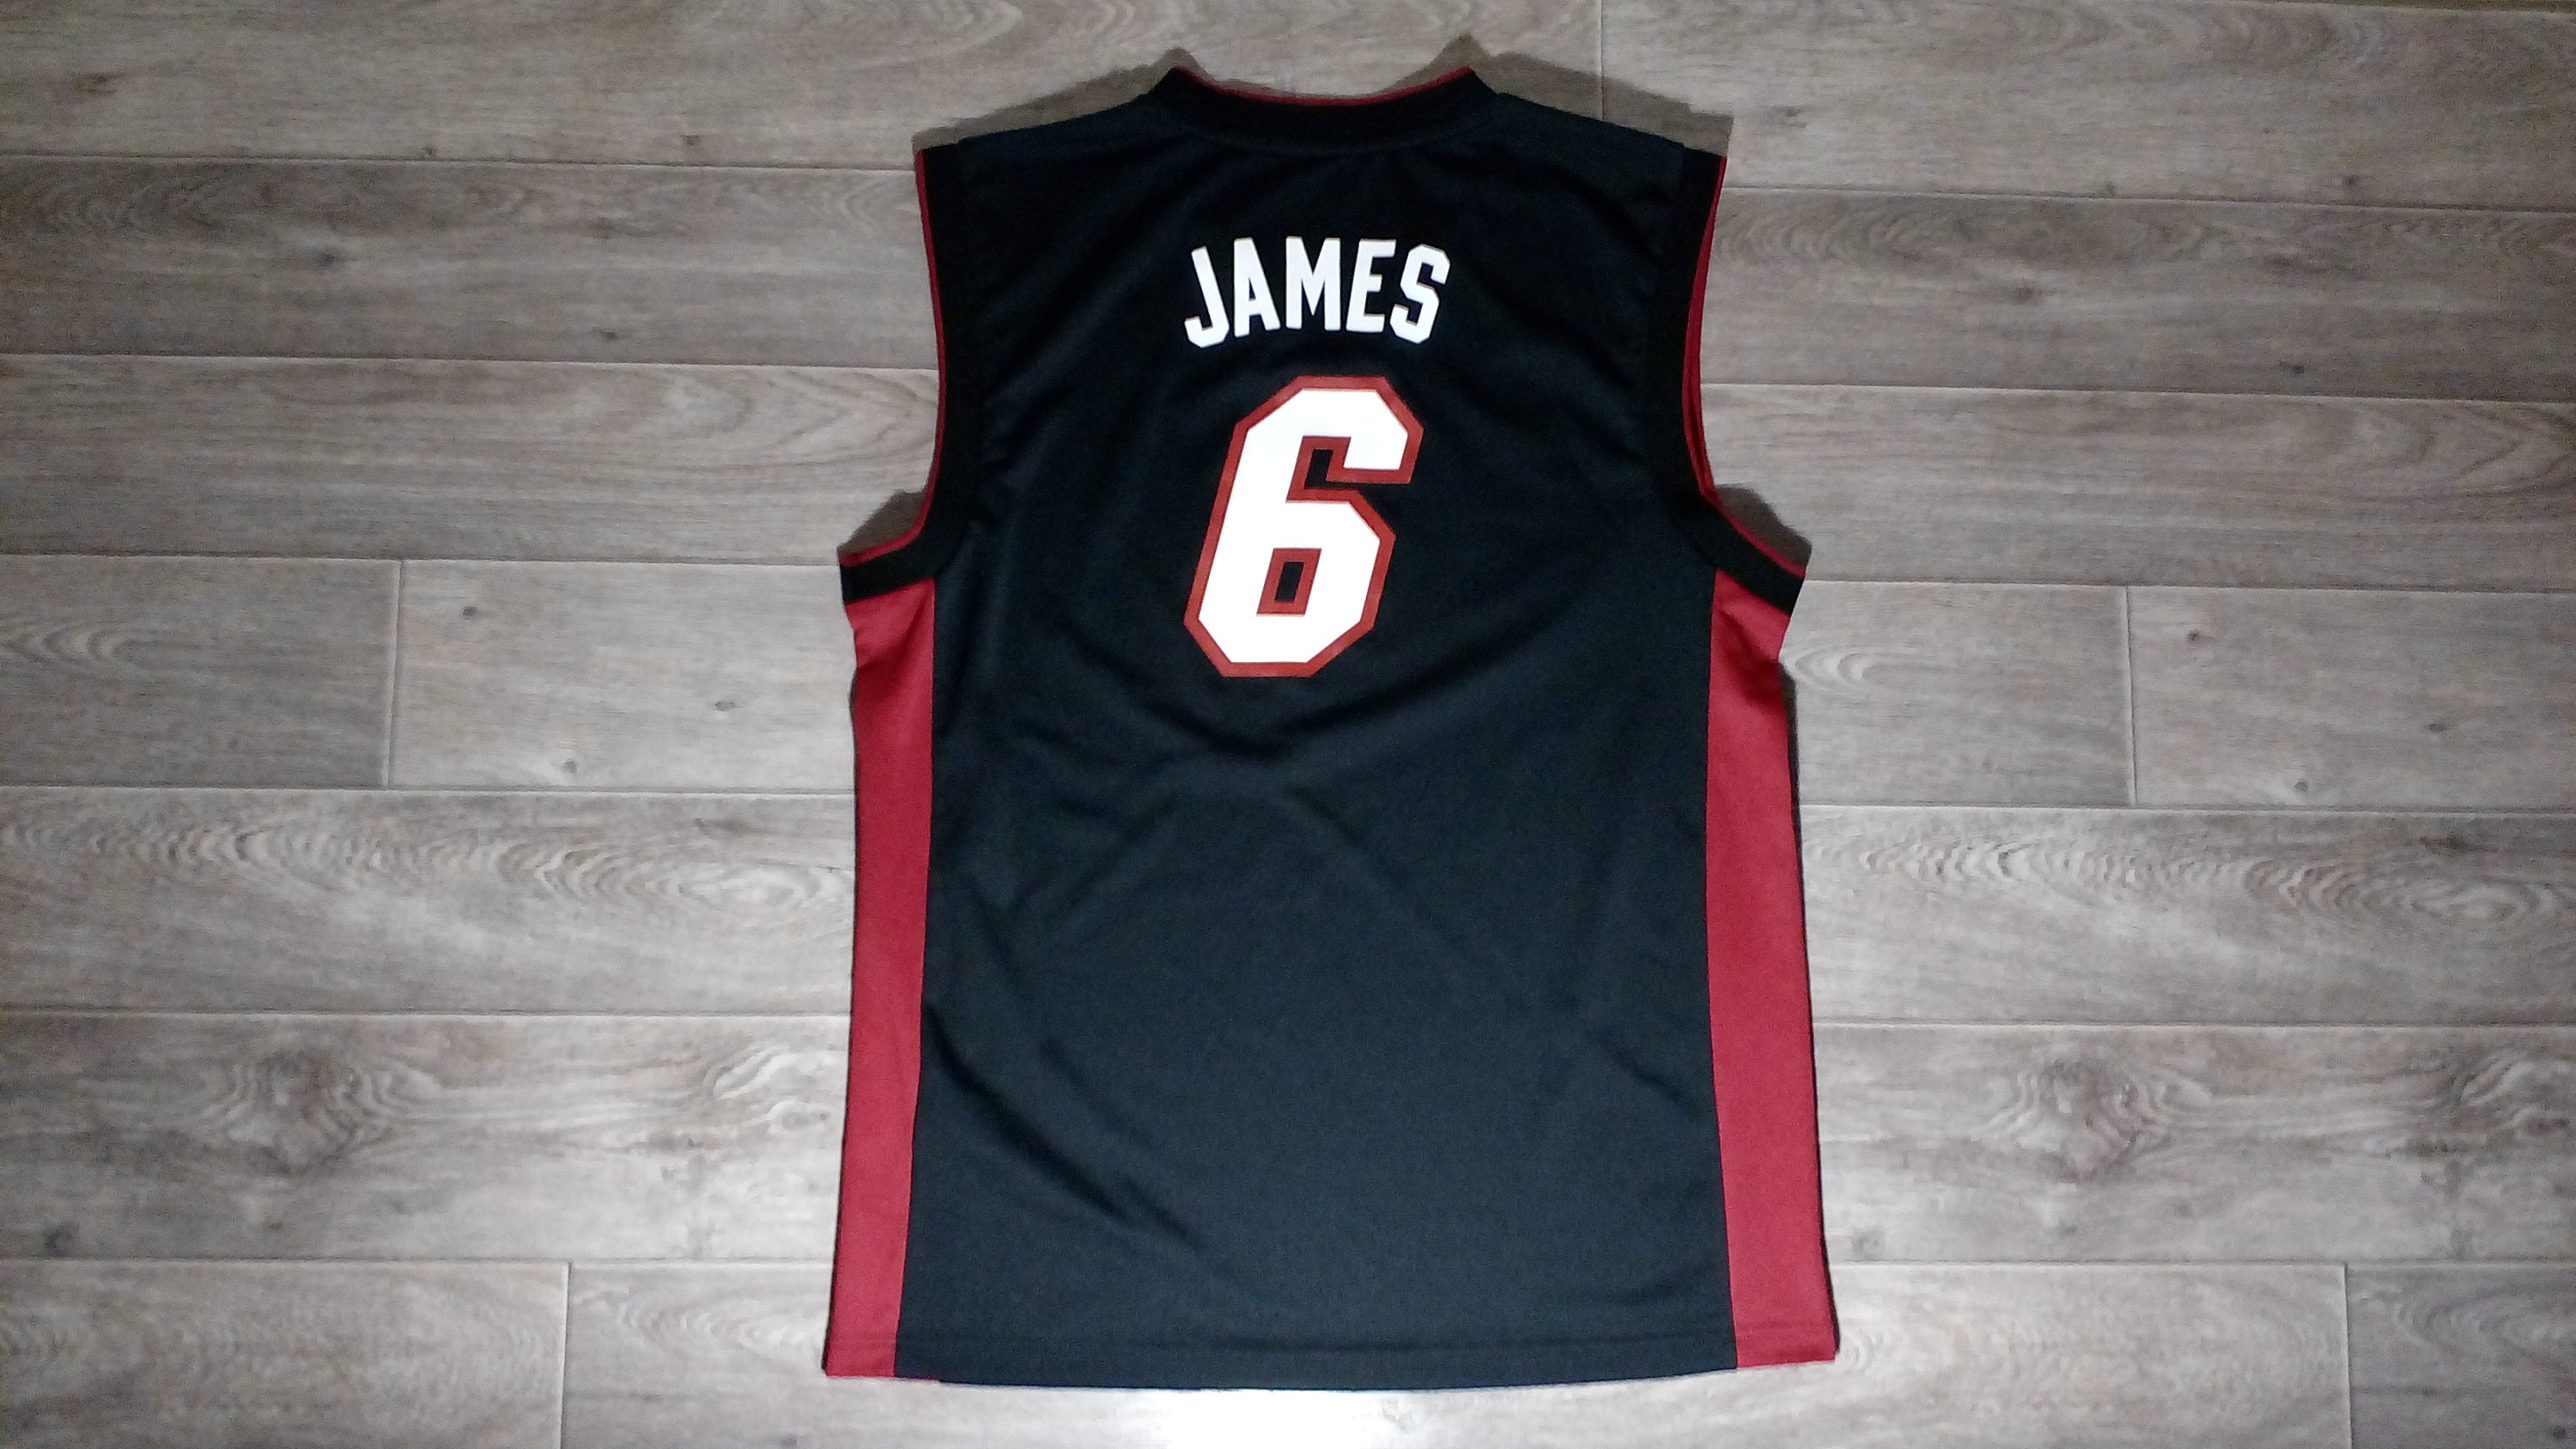 Youth Adidas NBA Miami Heat LeBron James #6 Black Basketball Jersey Sz L  (14/16)